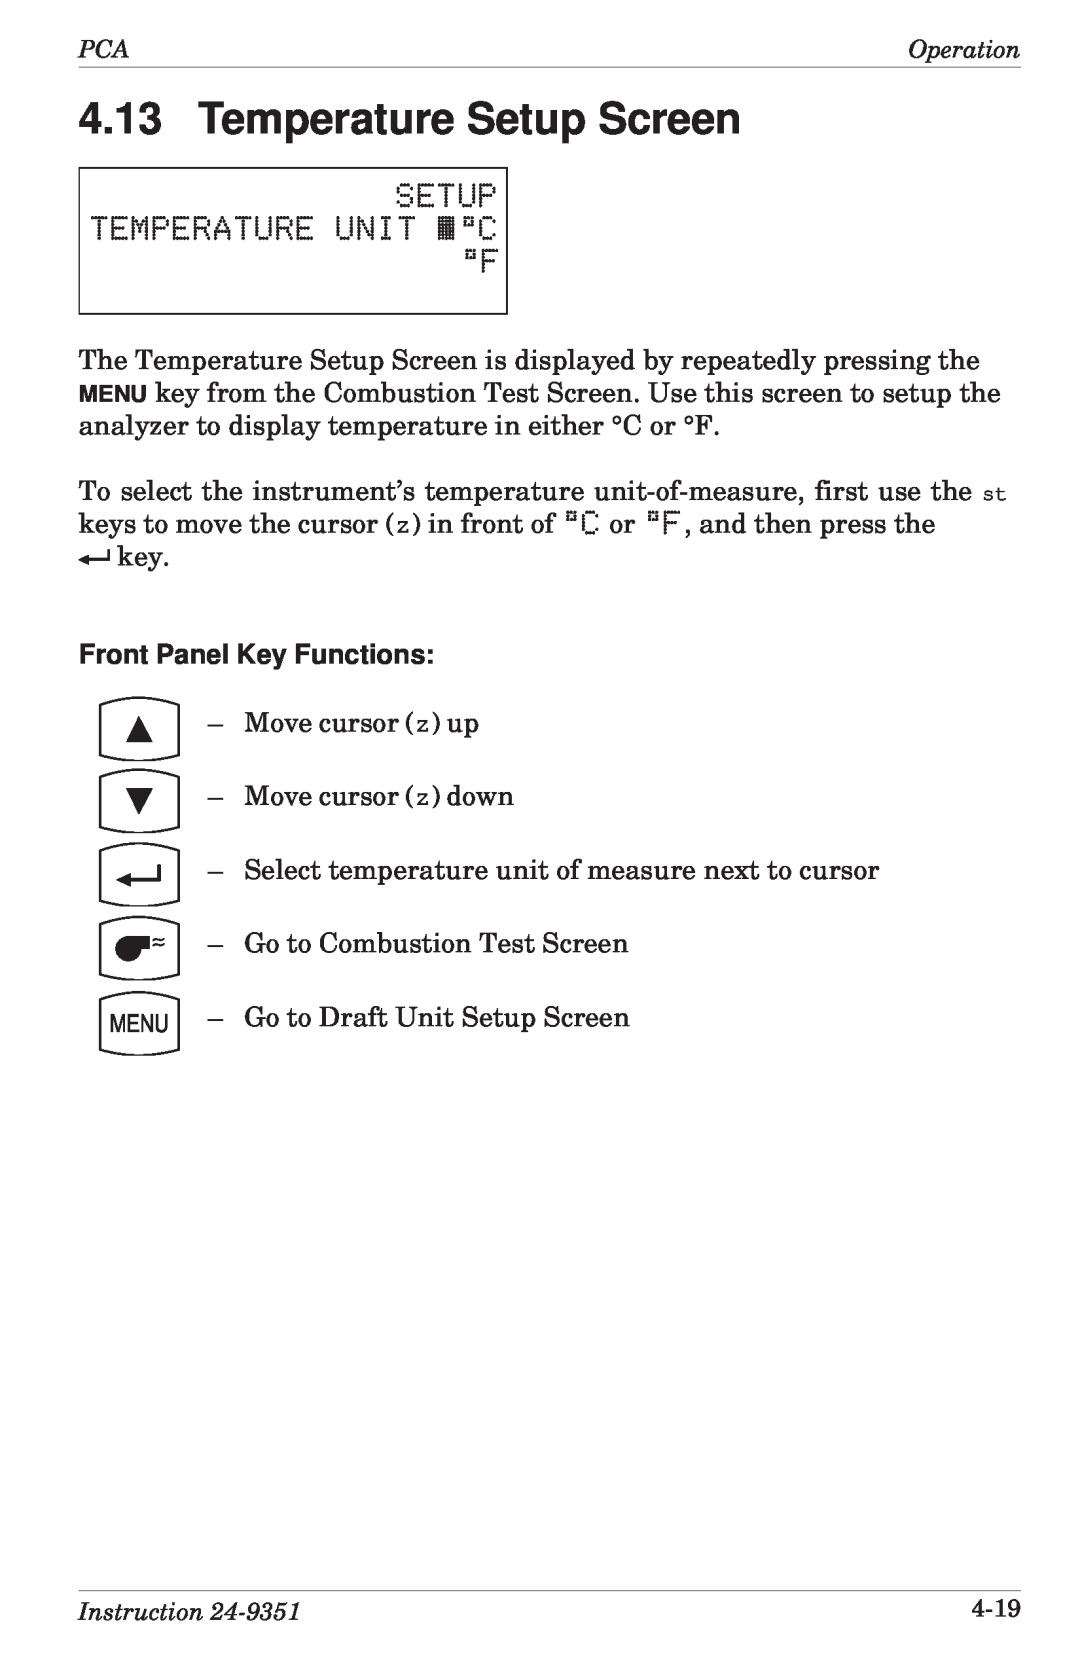 Bacharach 24-9351 manual Temperature Setup Screen, Setup Temperature Unit «C F, Front Panel Key Functions 